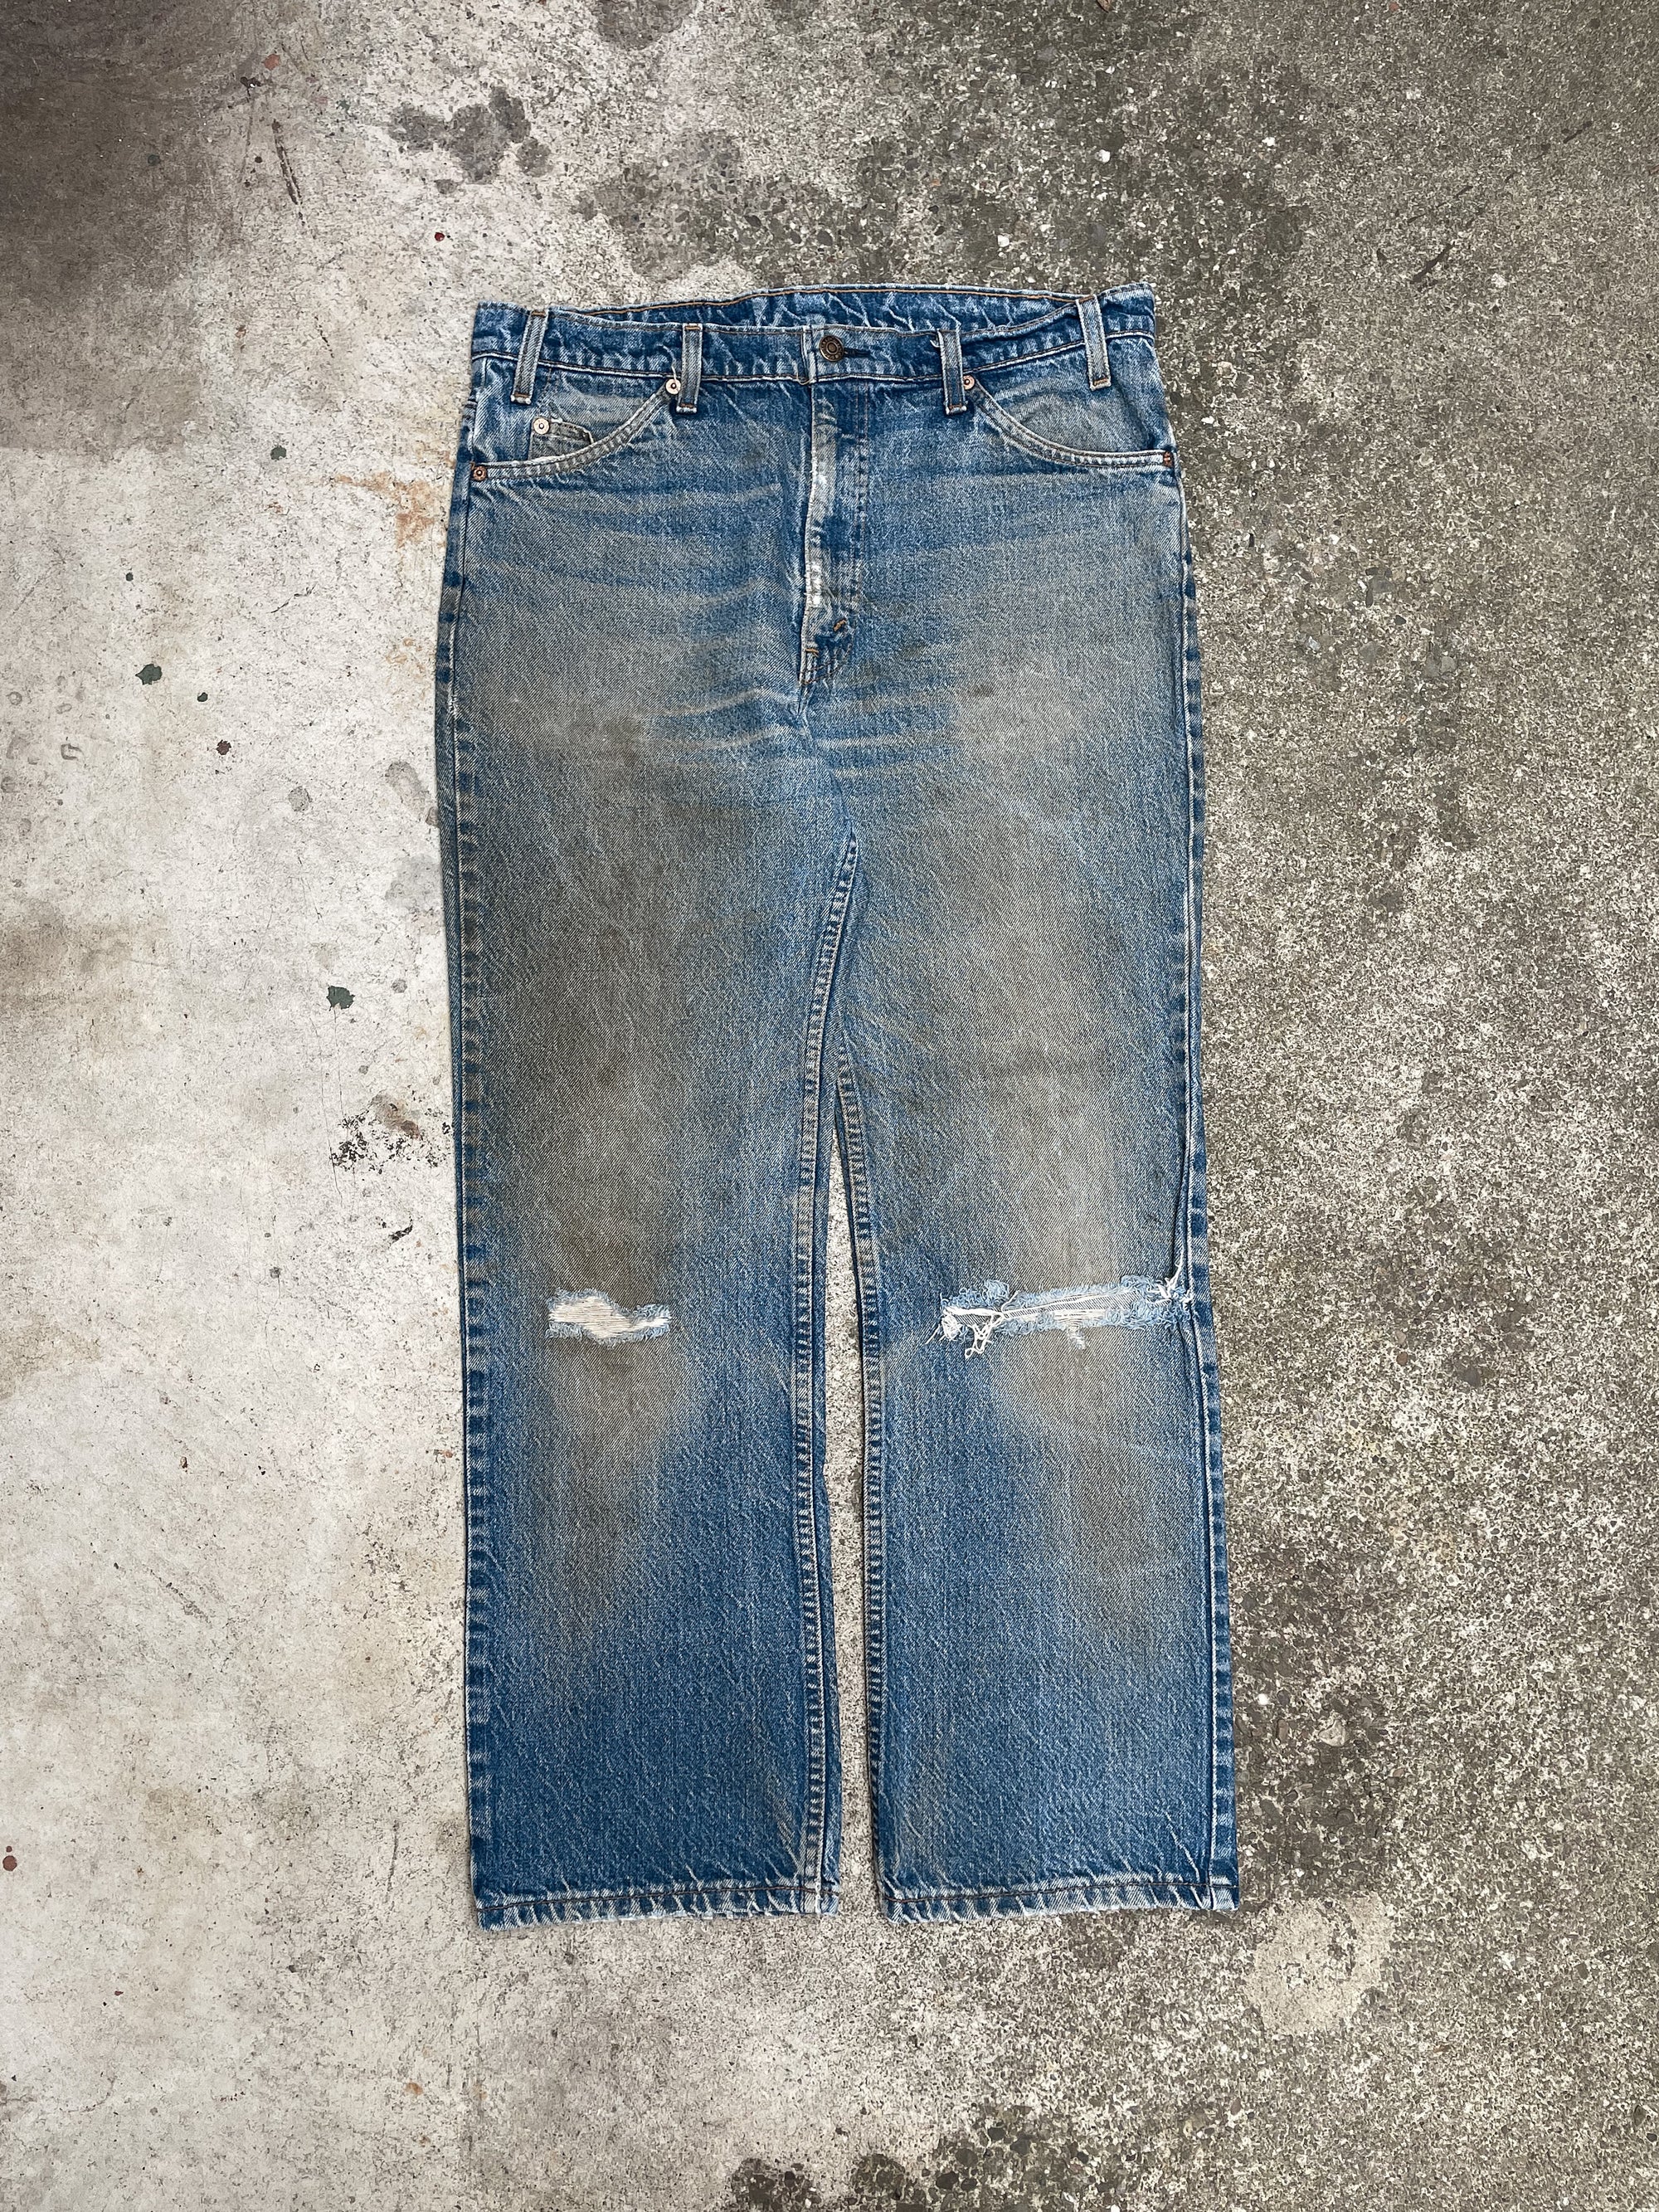 1980s/90s Orange Tab Levi’s Distressed Dirty Faded Blue 517 (34X28)